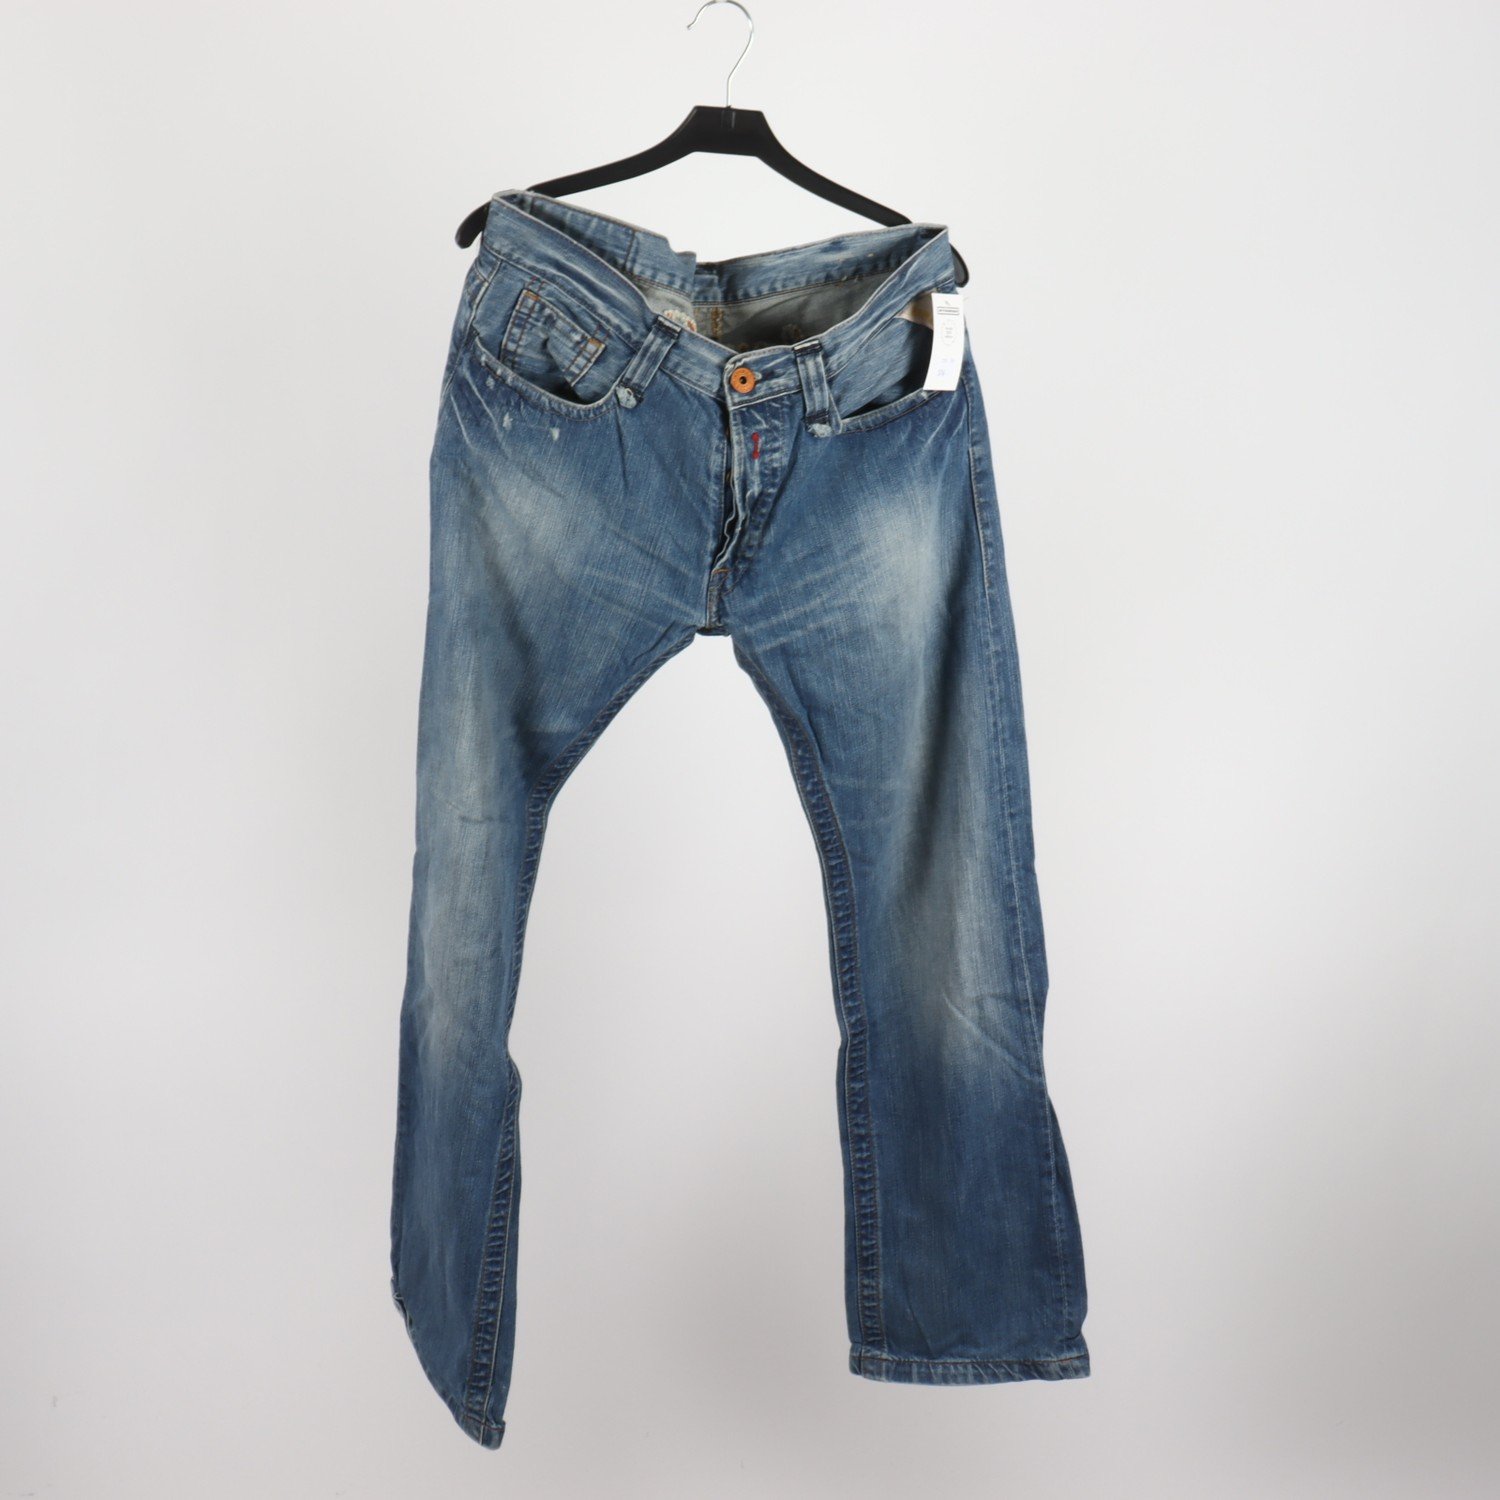 Jeans, Replay, blå, stl. 32/34